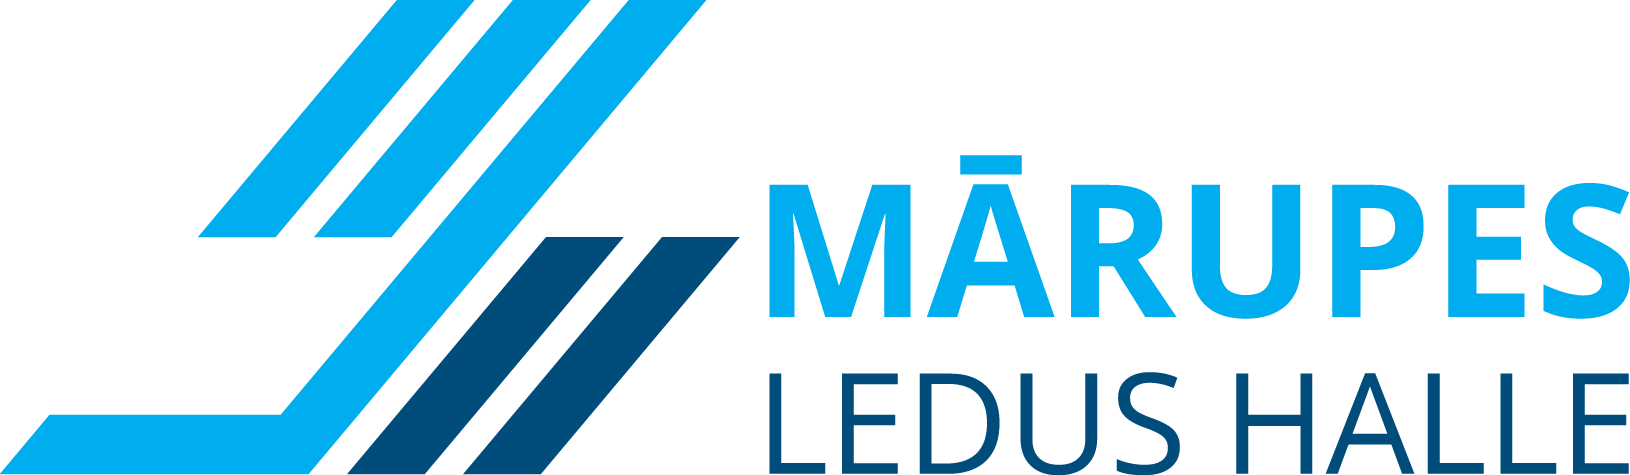 Lhm Logo Full C - Smartness Overloaded (1630x475), Png Download